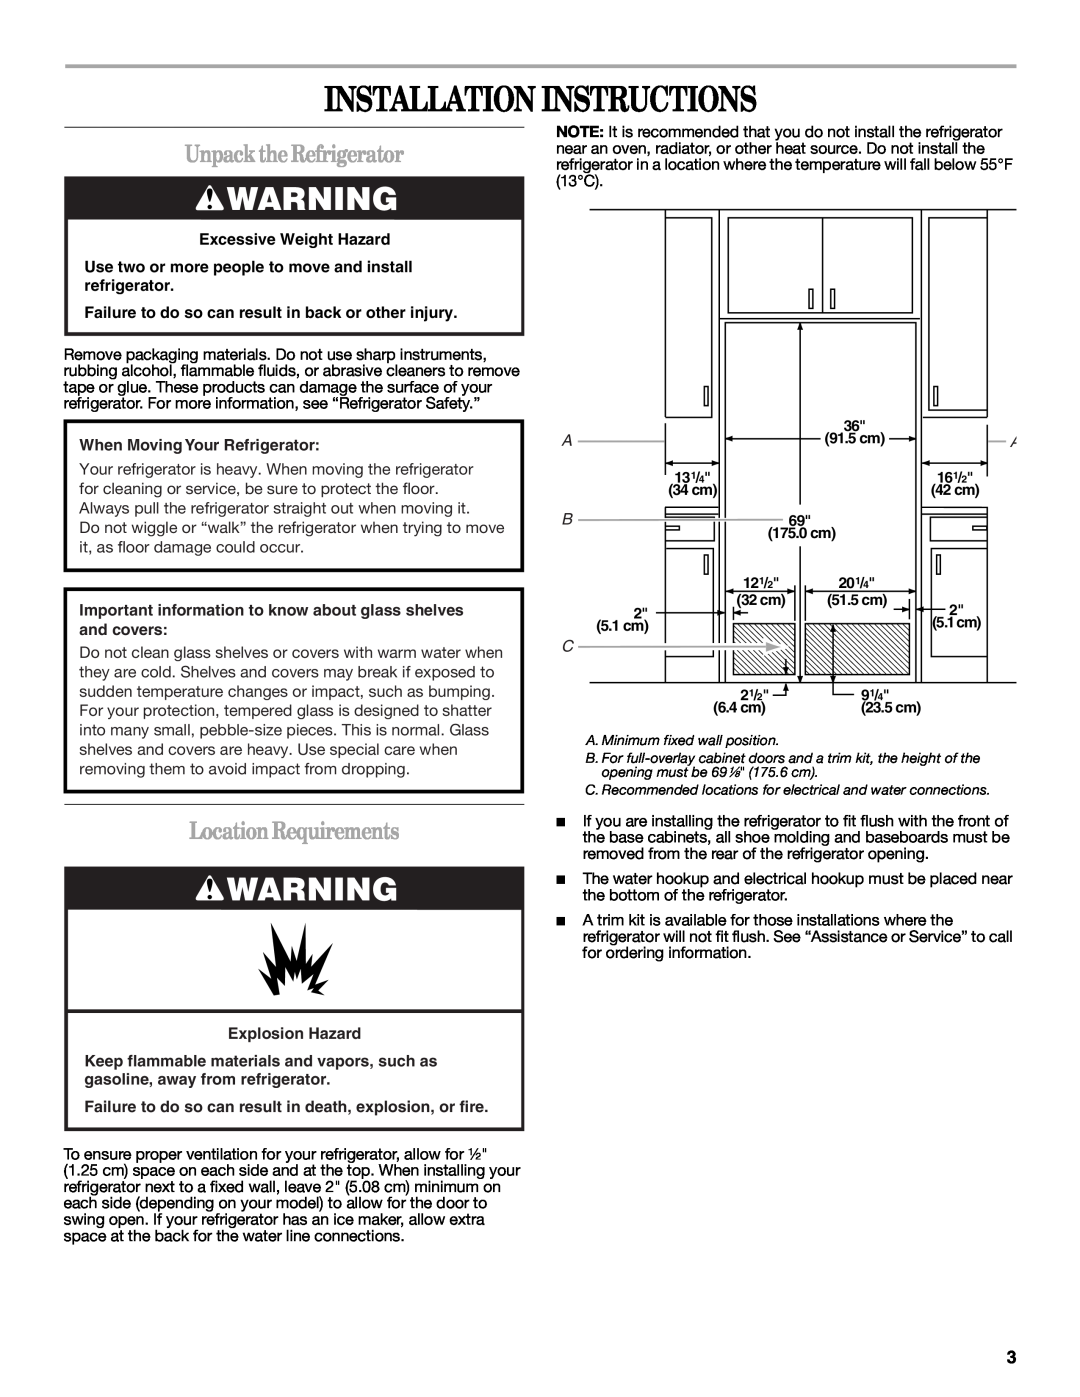 Whirlpool GC1SHAXMB00 Installation Instructions, UnpacktheRefrigerator, LocationRequirements, Excessive Weight Hazard 